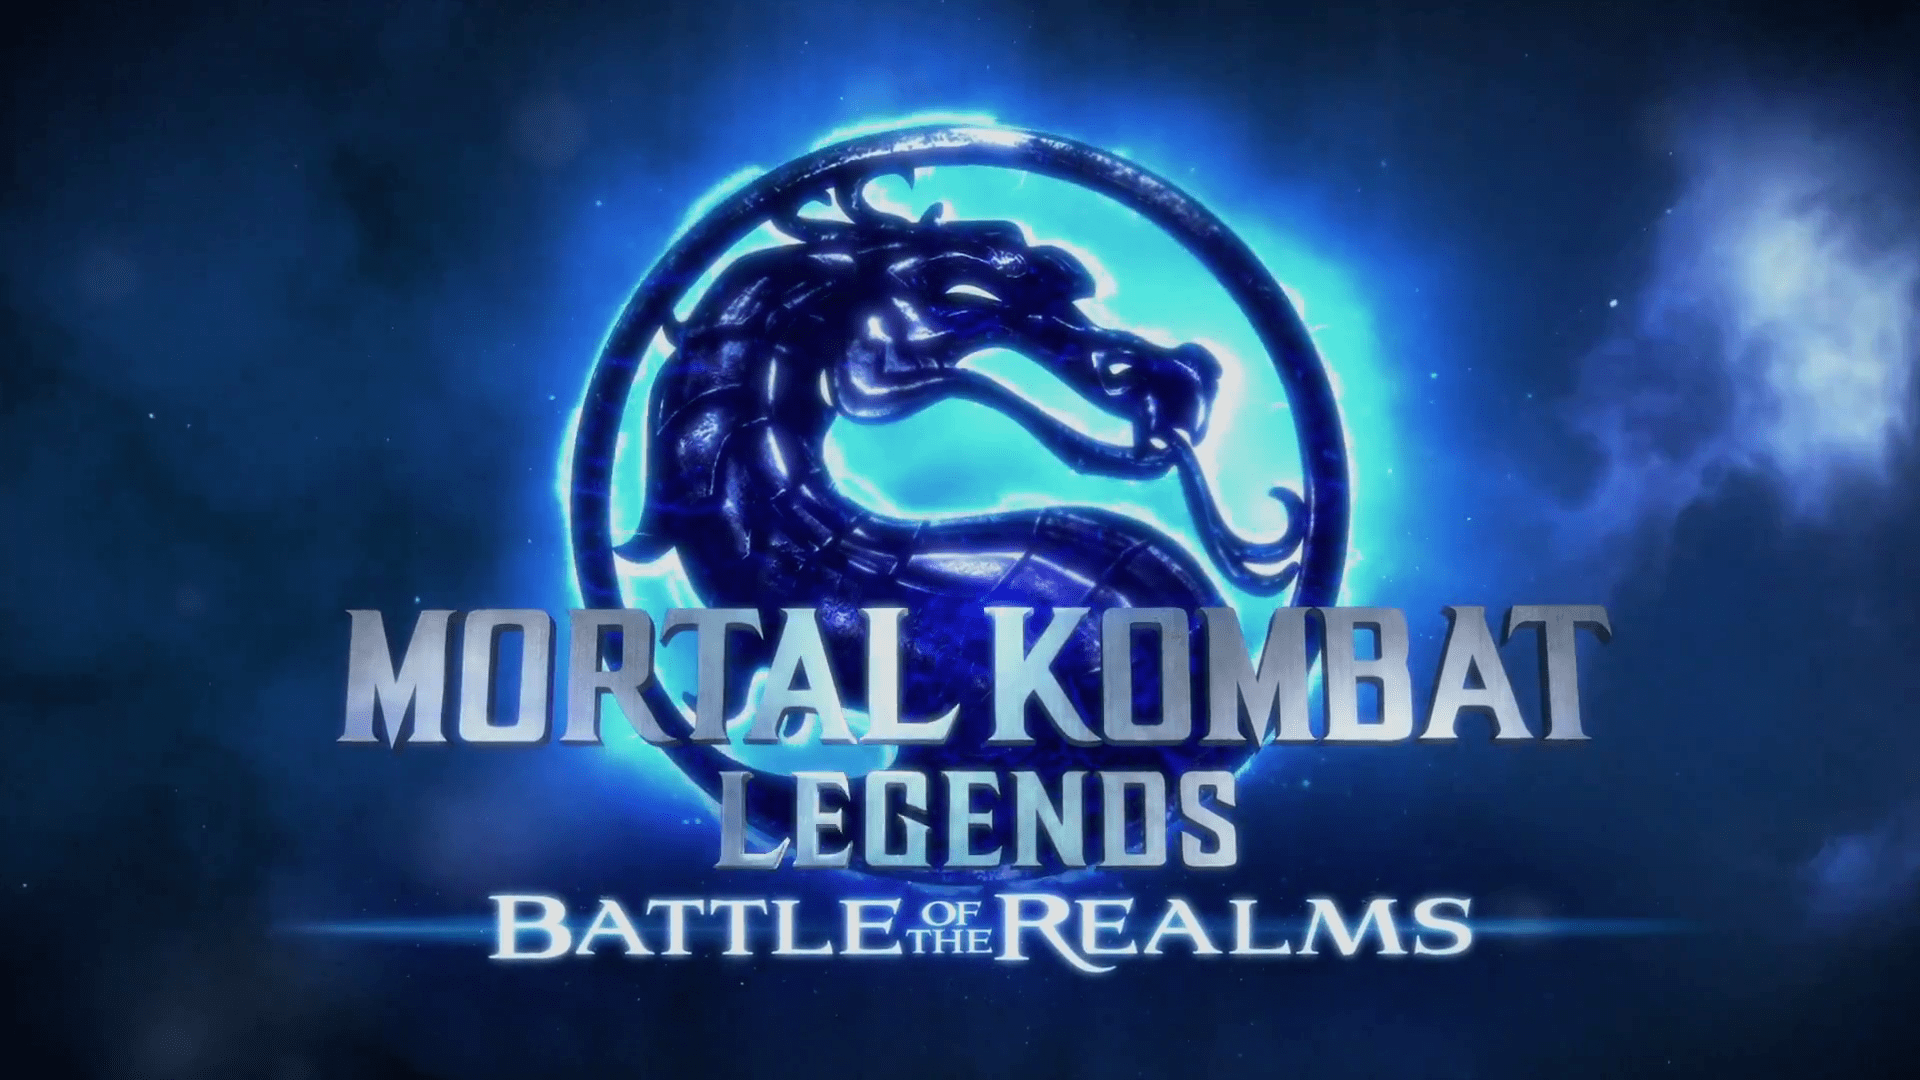 Mortal Kombat Legends: Battle of the Realms Reviewed. SG Life